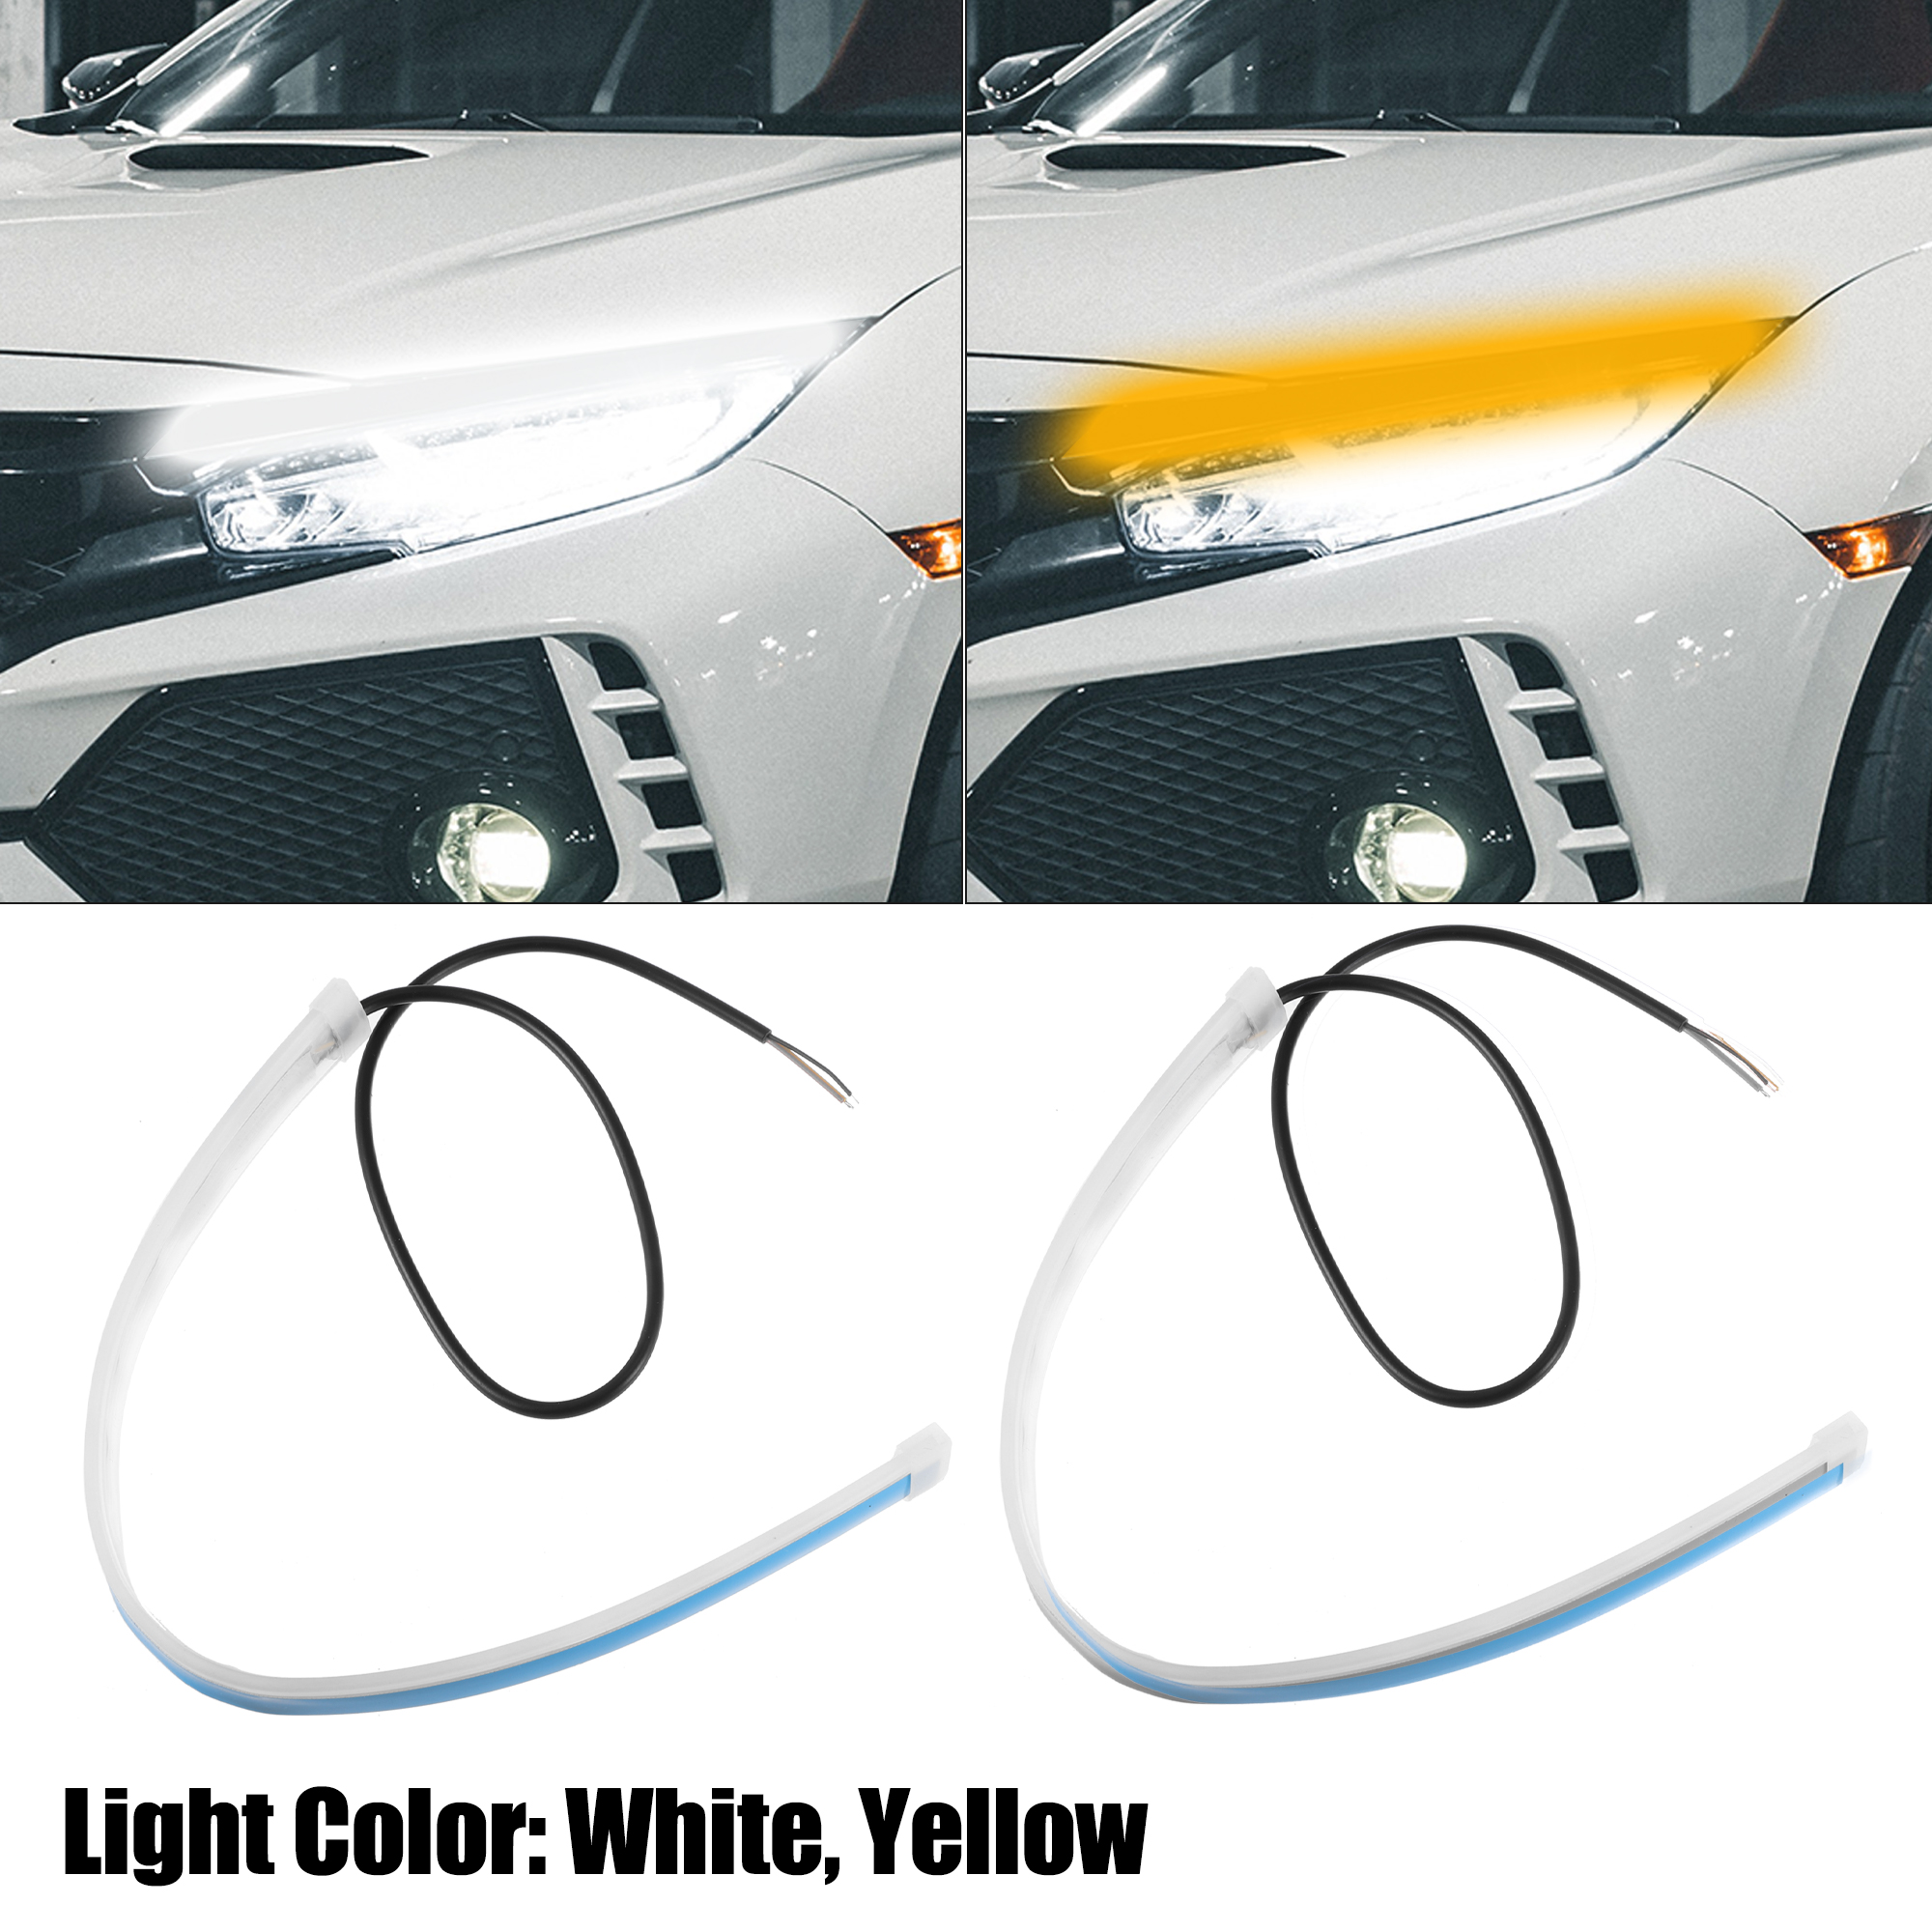 Unique Bargains 1 Pair 30cm Car LED Headlight Strip for Daytime Running Lights White Yellow